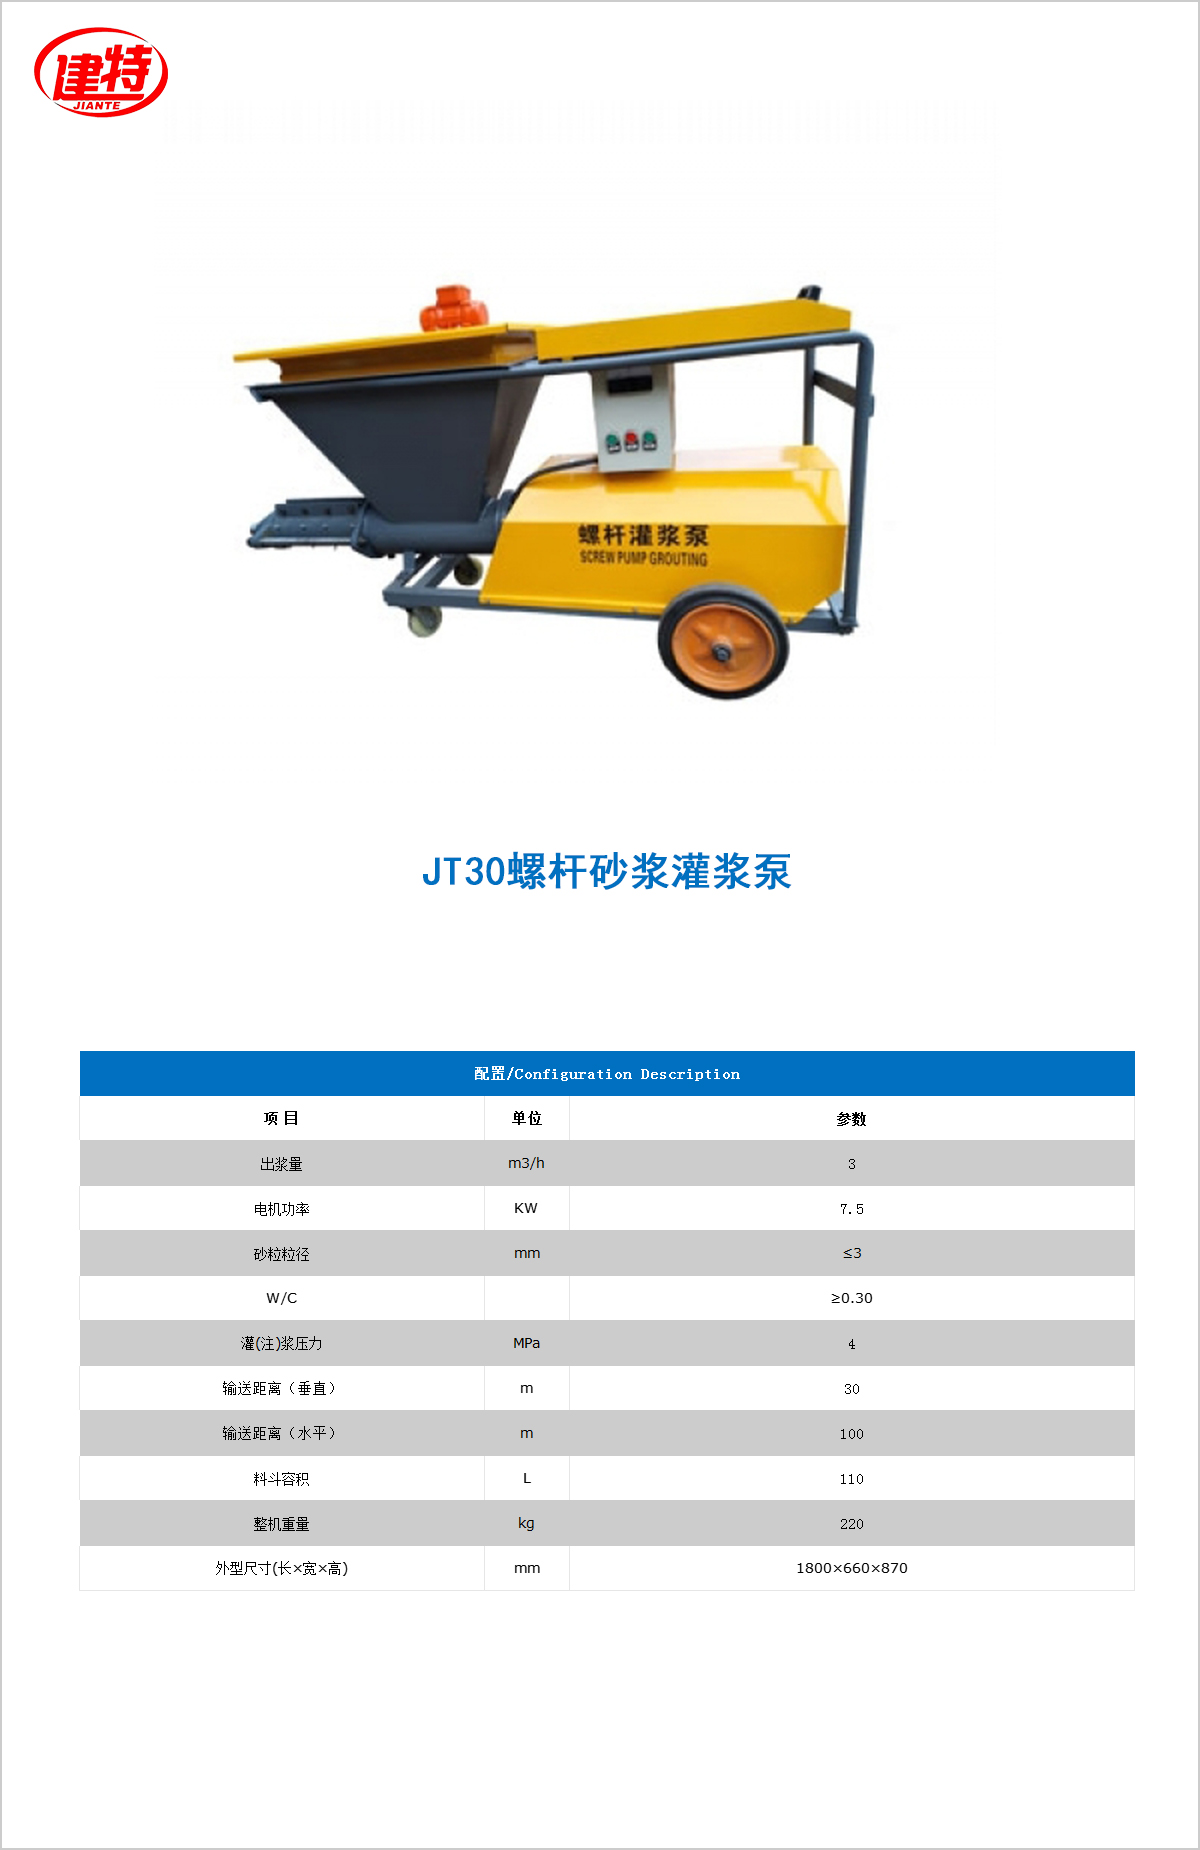 02-JT30螺桿砂漿灌漿泵